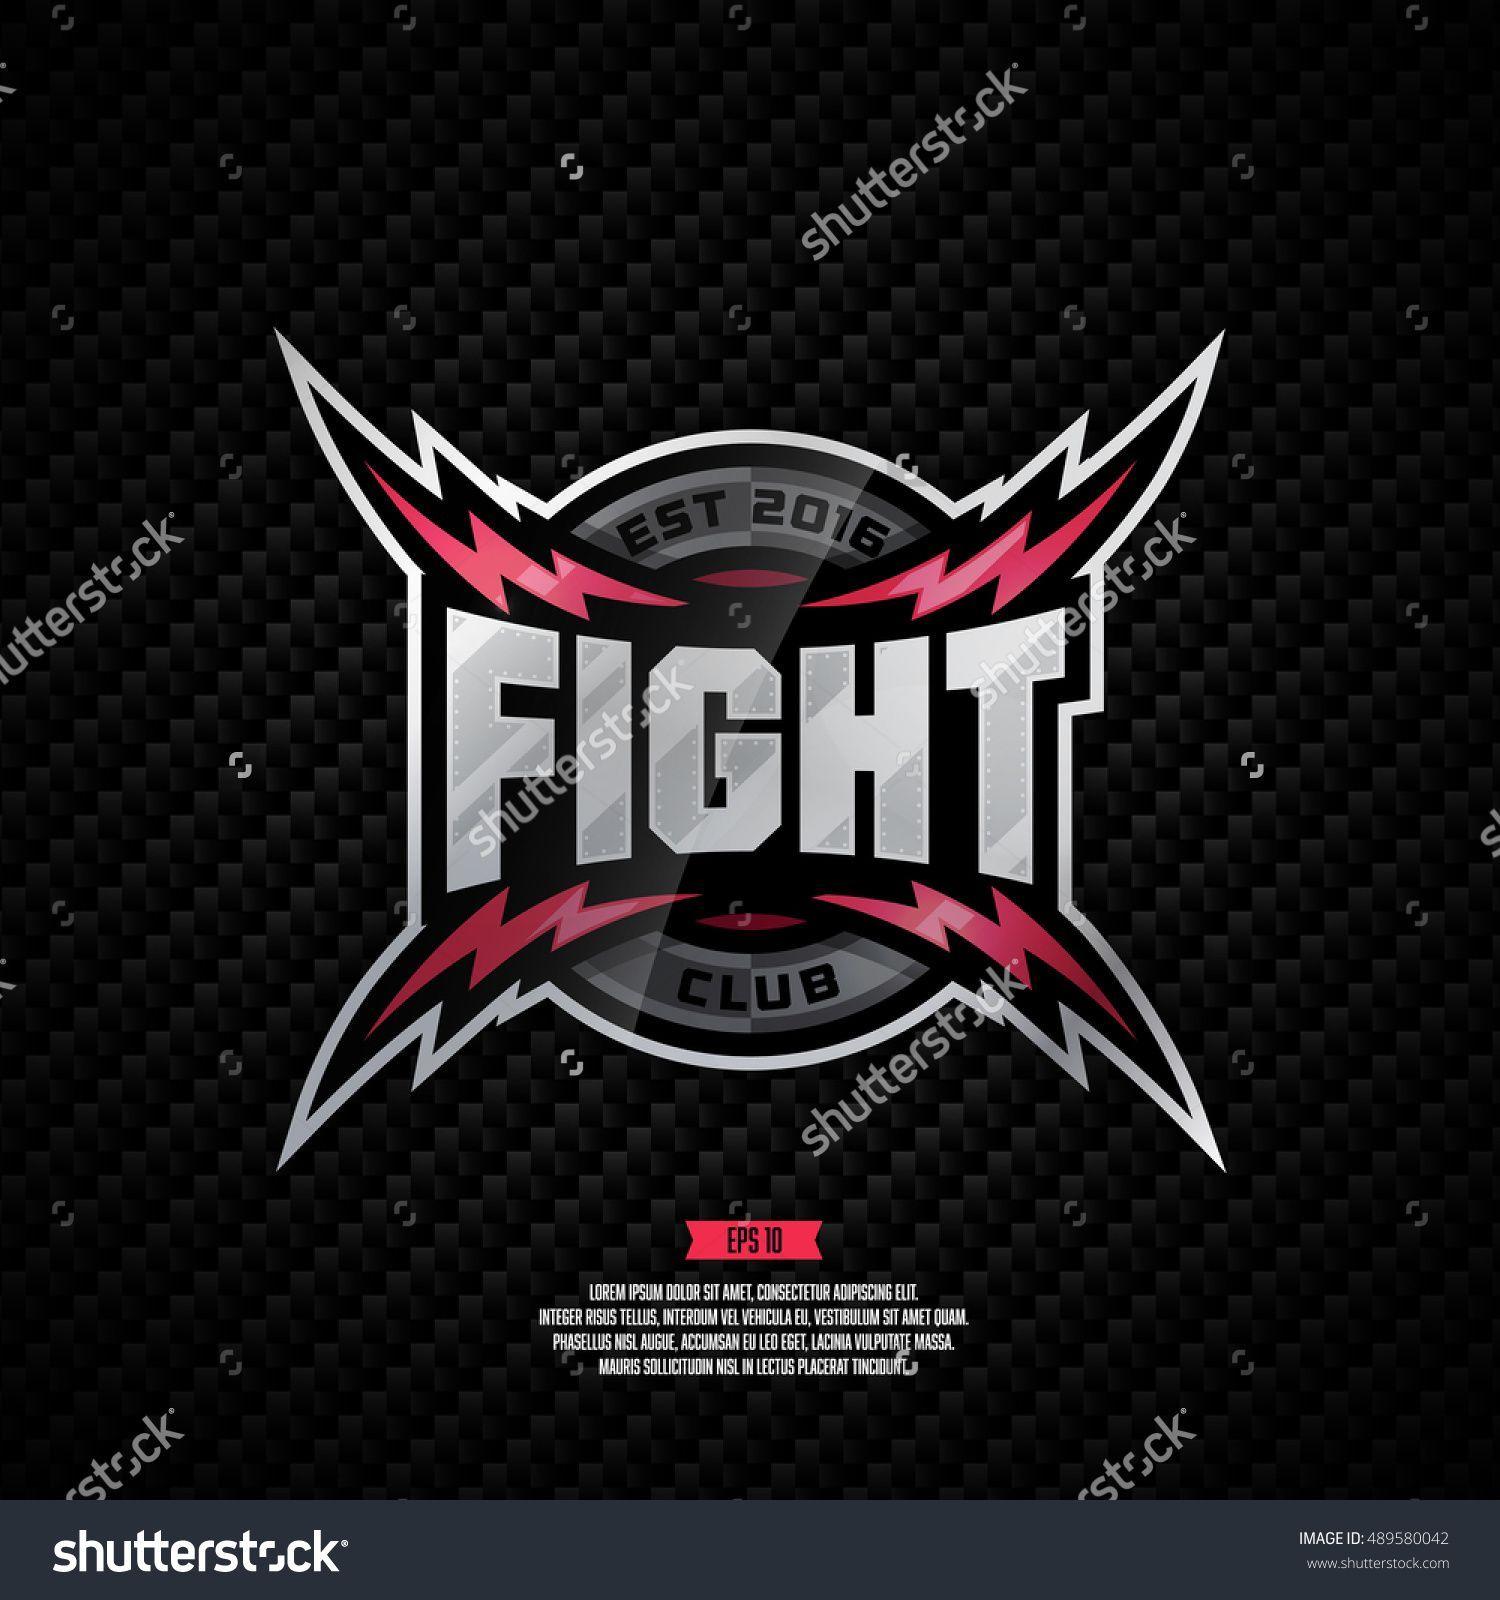 Modern Team Logo - Modern professional fight club logo design. | LOGO | Pinterest ...